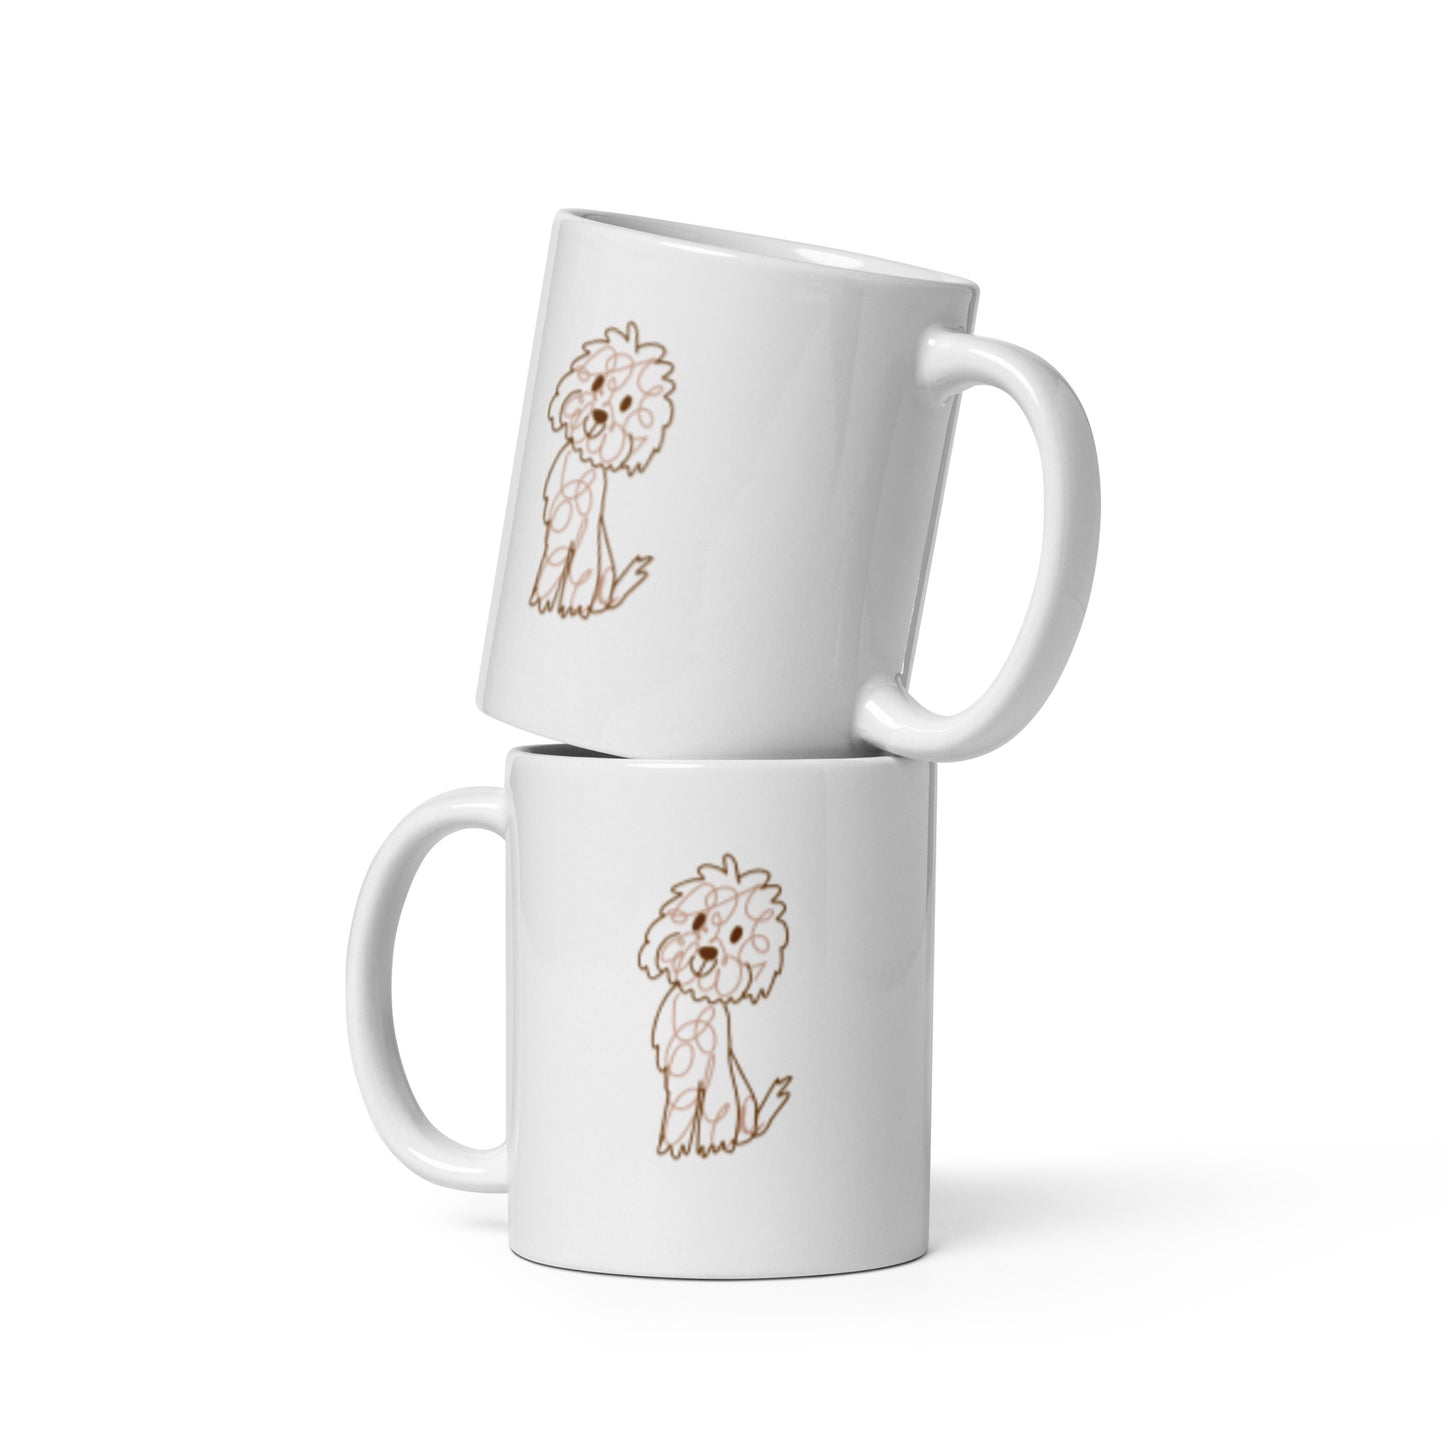 White ceramic coffee mug with cute doodle dog design